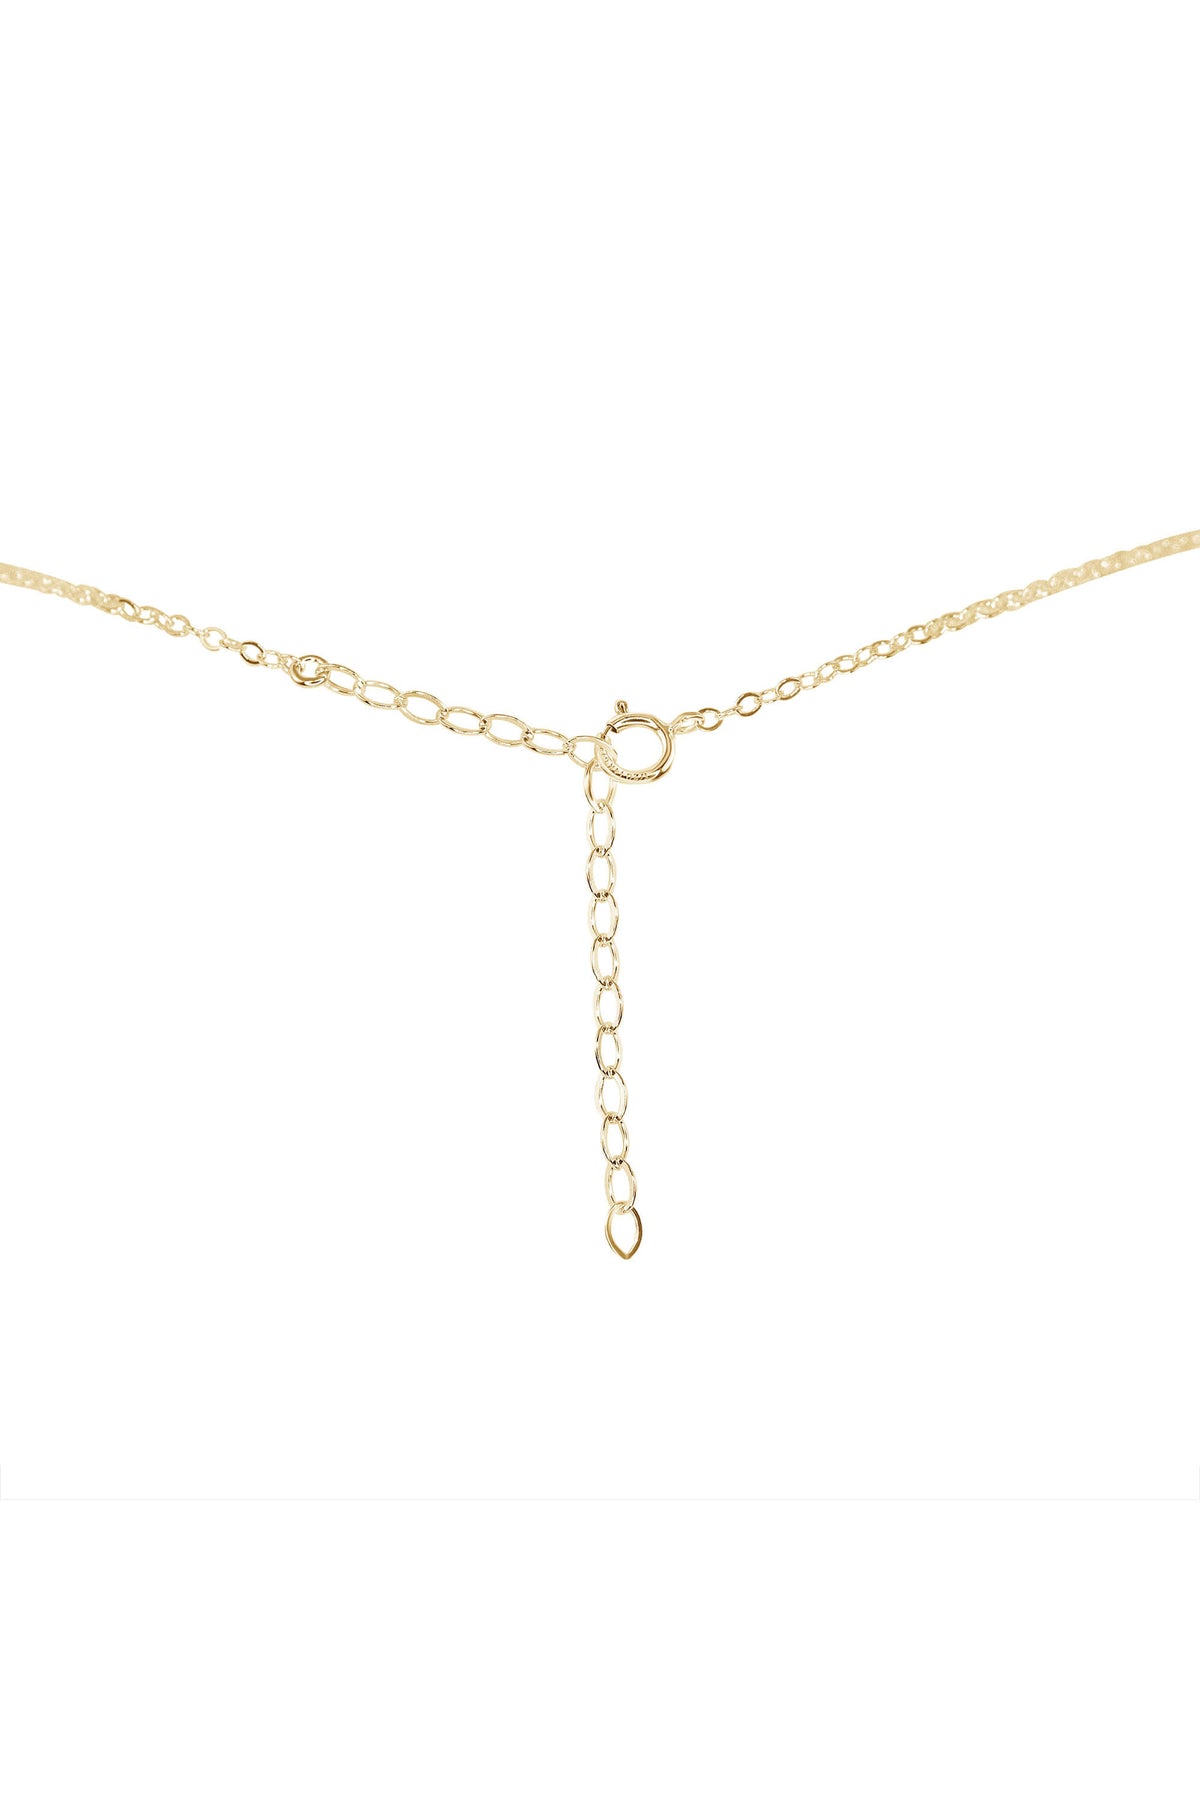 Raw Nugget Choker - Amethyst - 14K Gold Fill - Luna Tide Handmade Jewellery